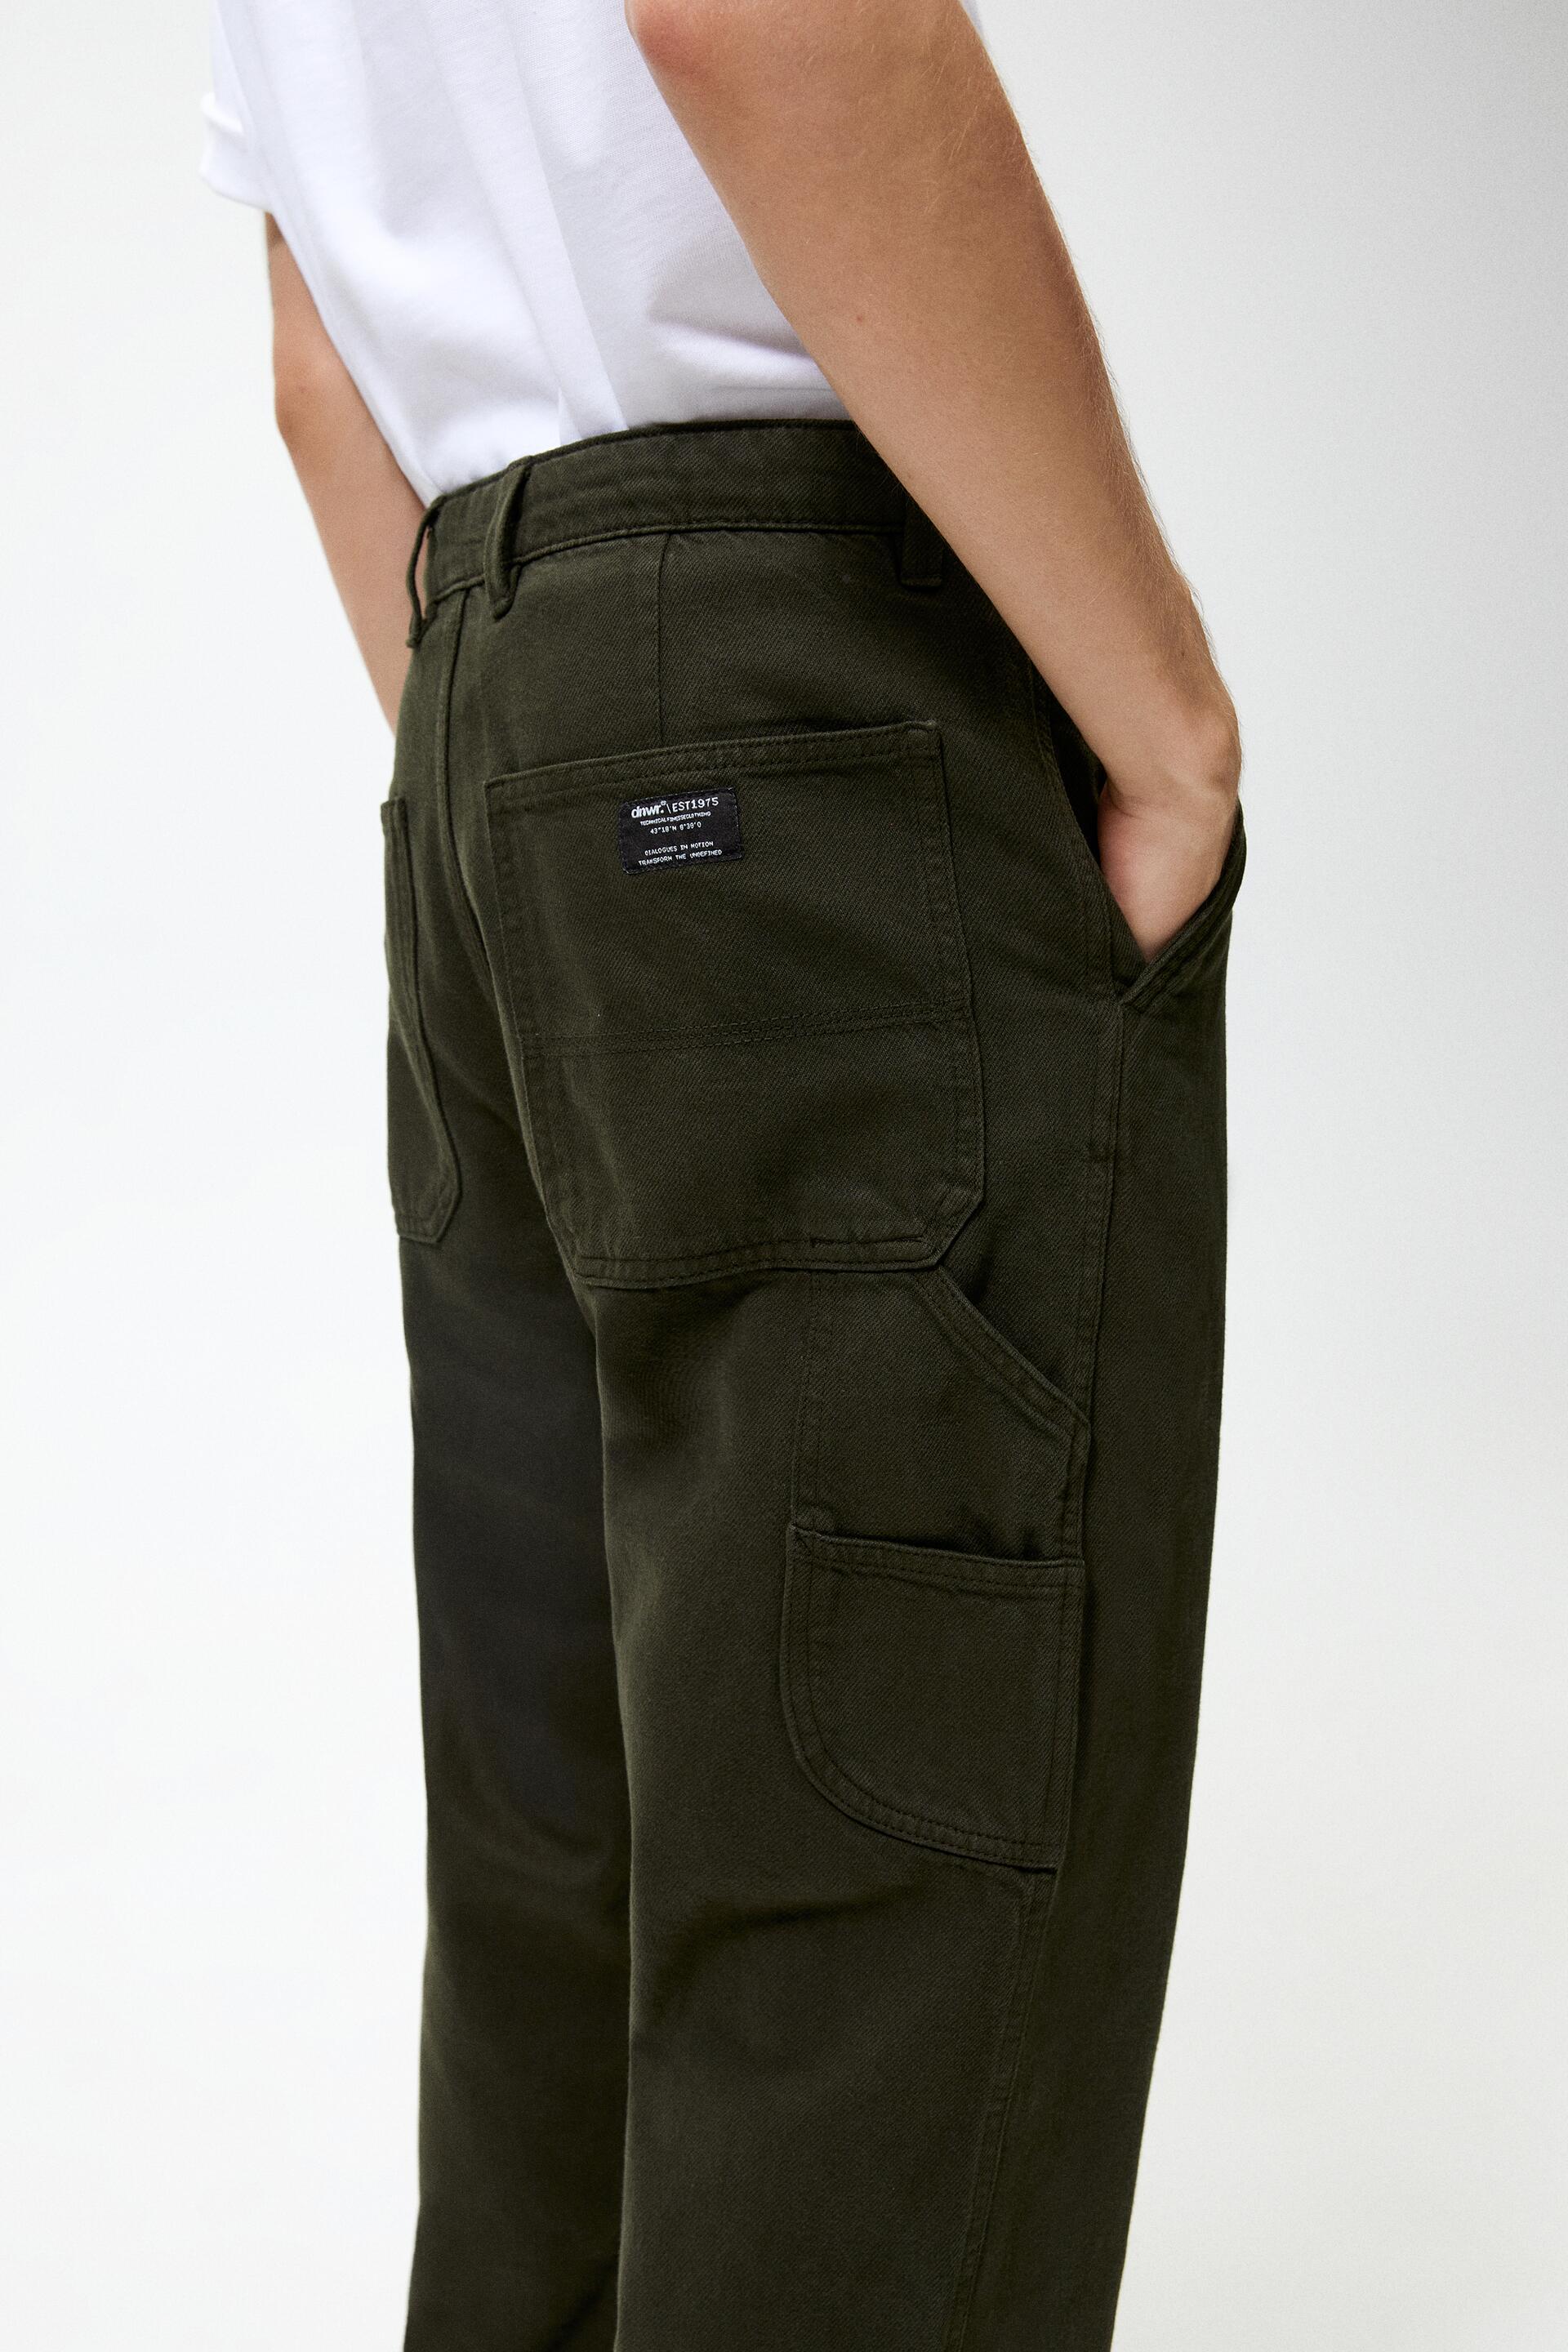 Zara Carpenter Pocket Pants - Big Apple Buddy